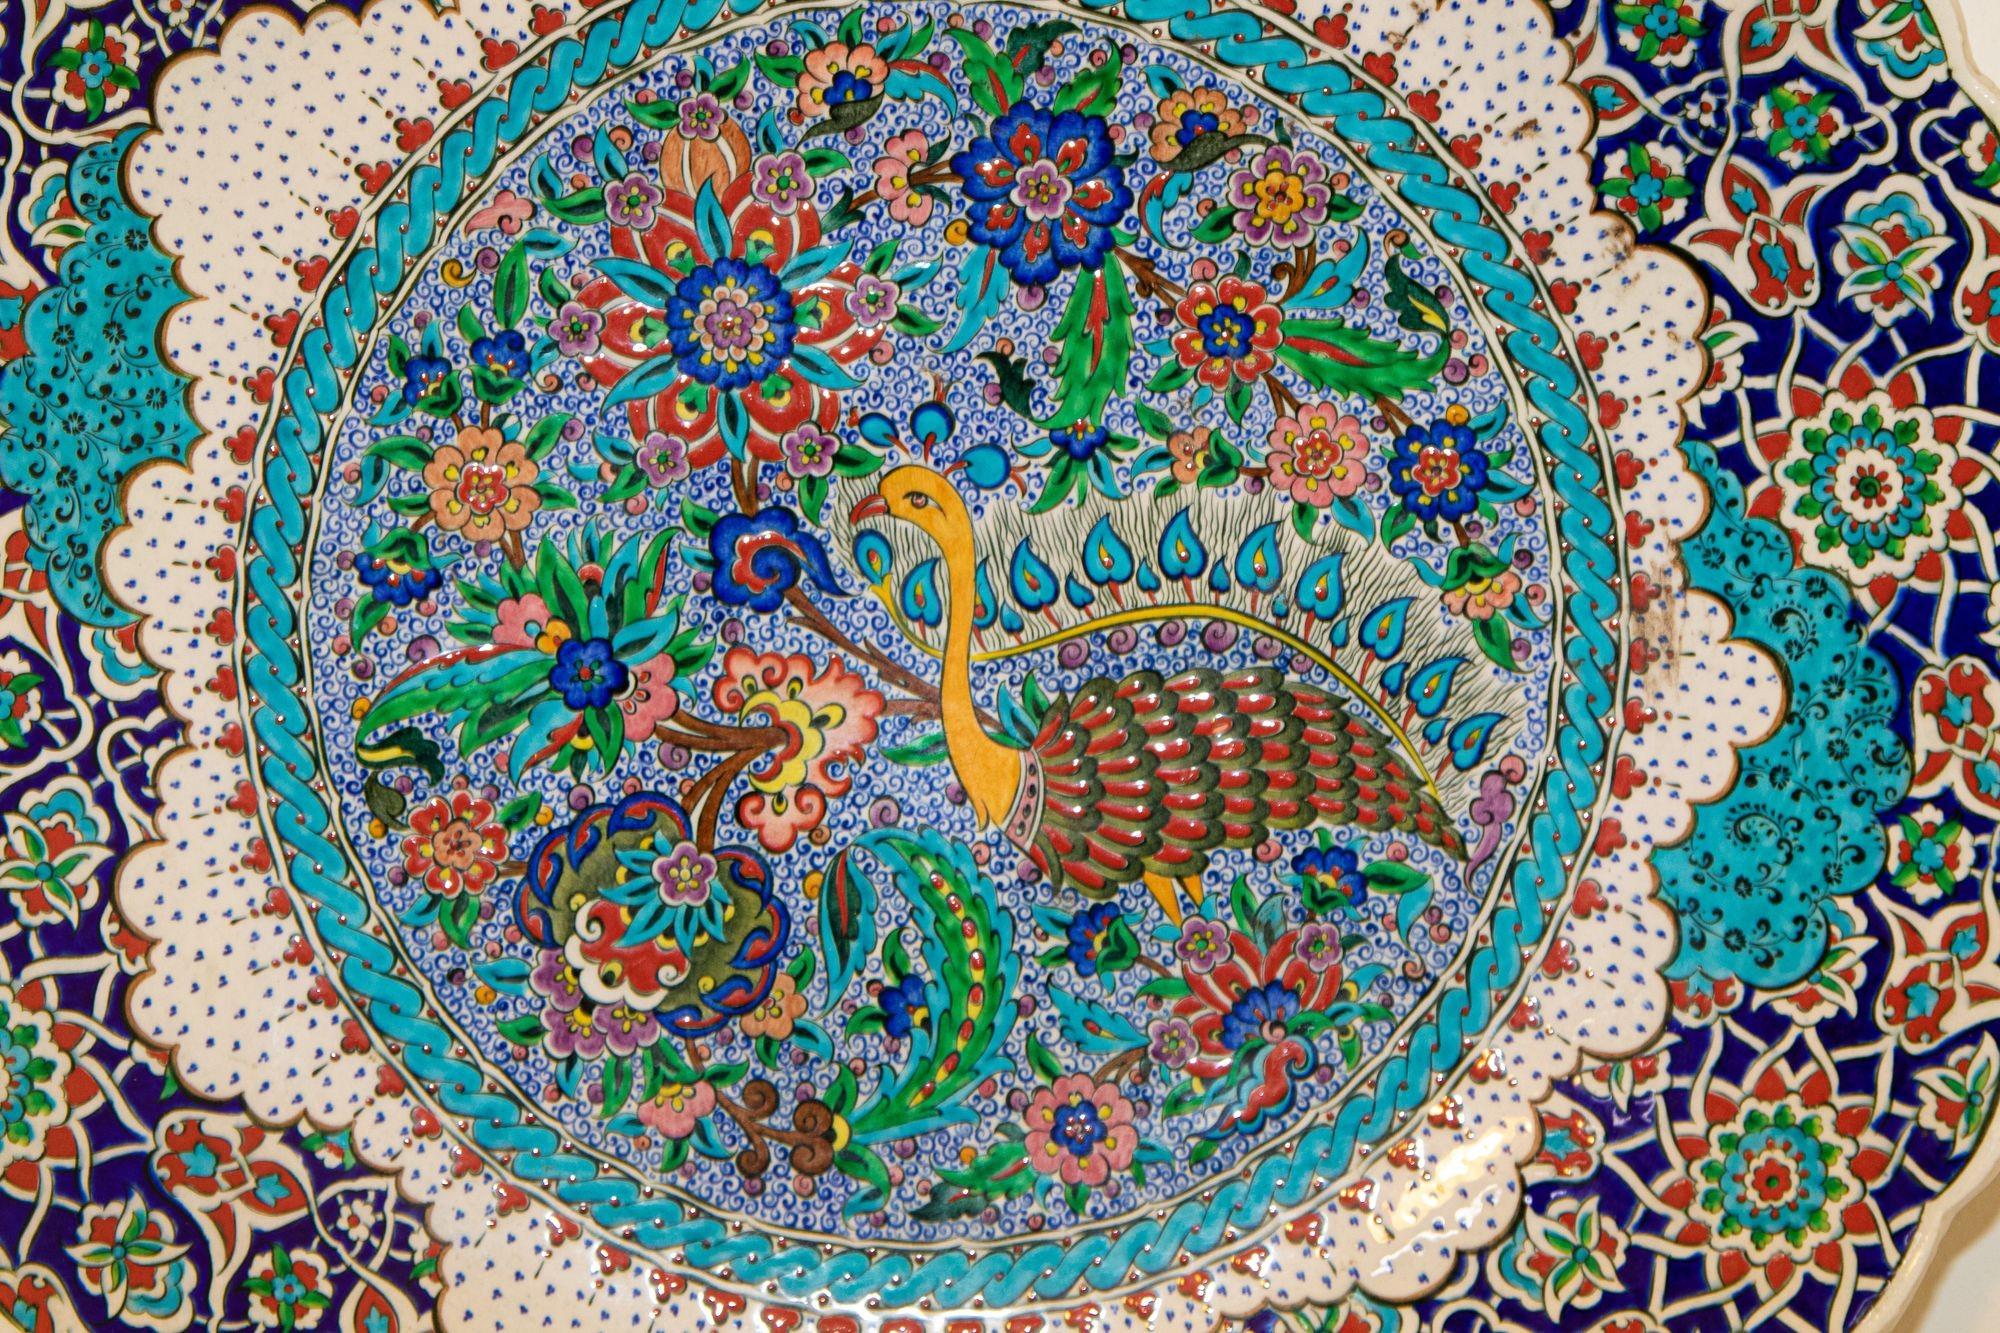 Hand Painted Decorative Plate After an Original Iznik 16th C. Ottoman Design 6